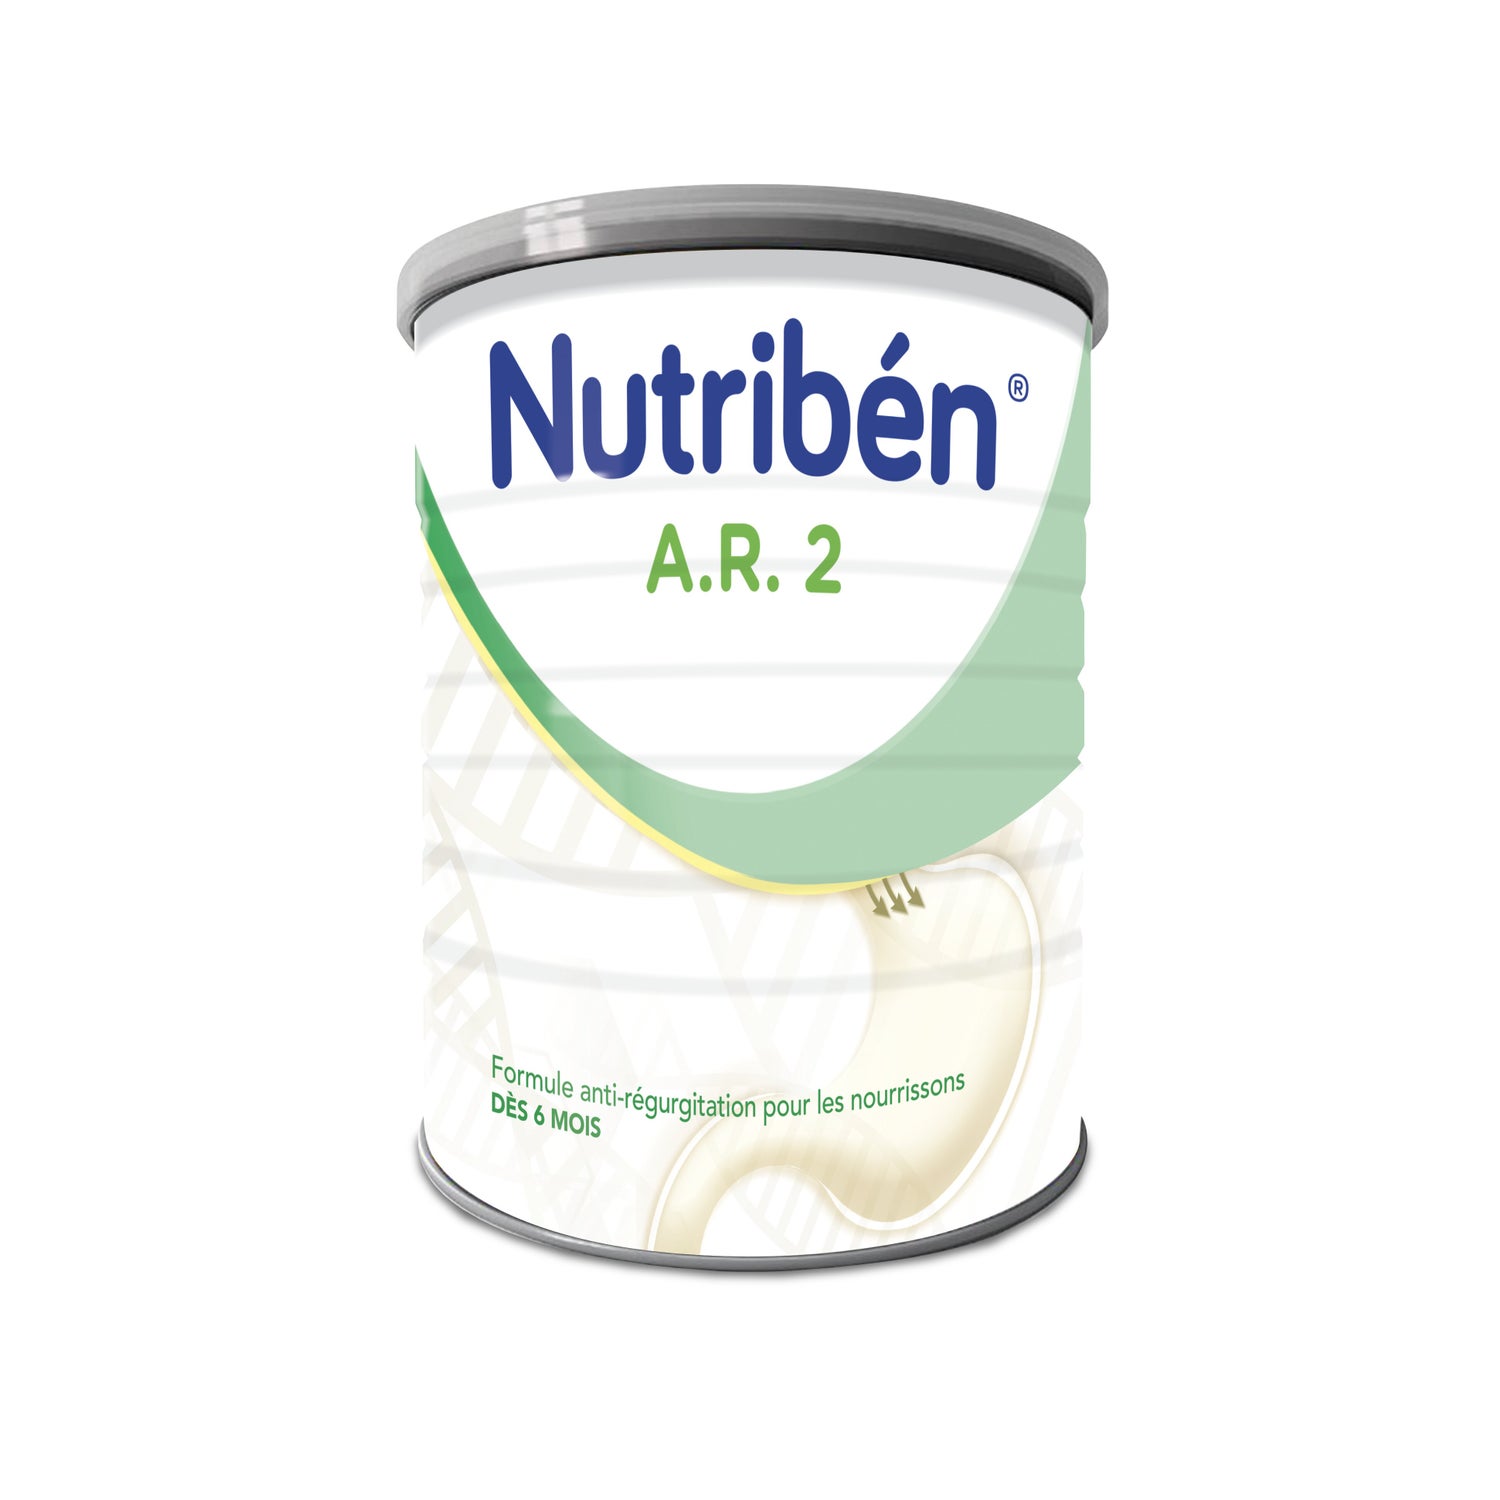 2 Nutriben AE 800gr. Milk antiestreñimiento below. - FARMACIA INTERNACIONAL